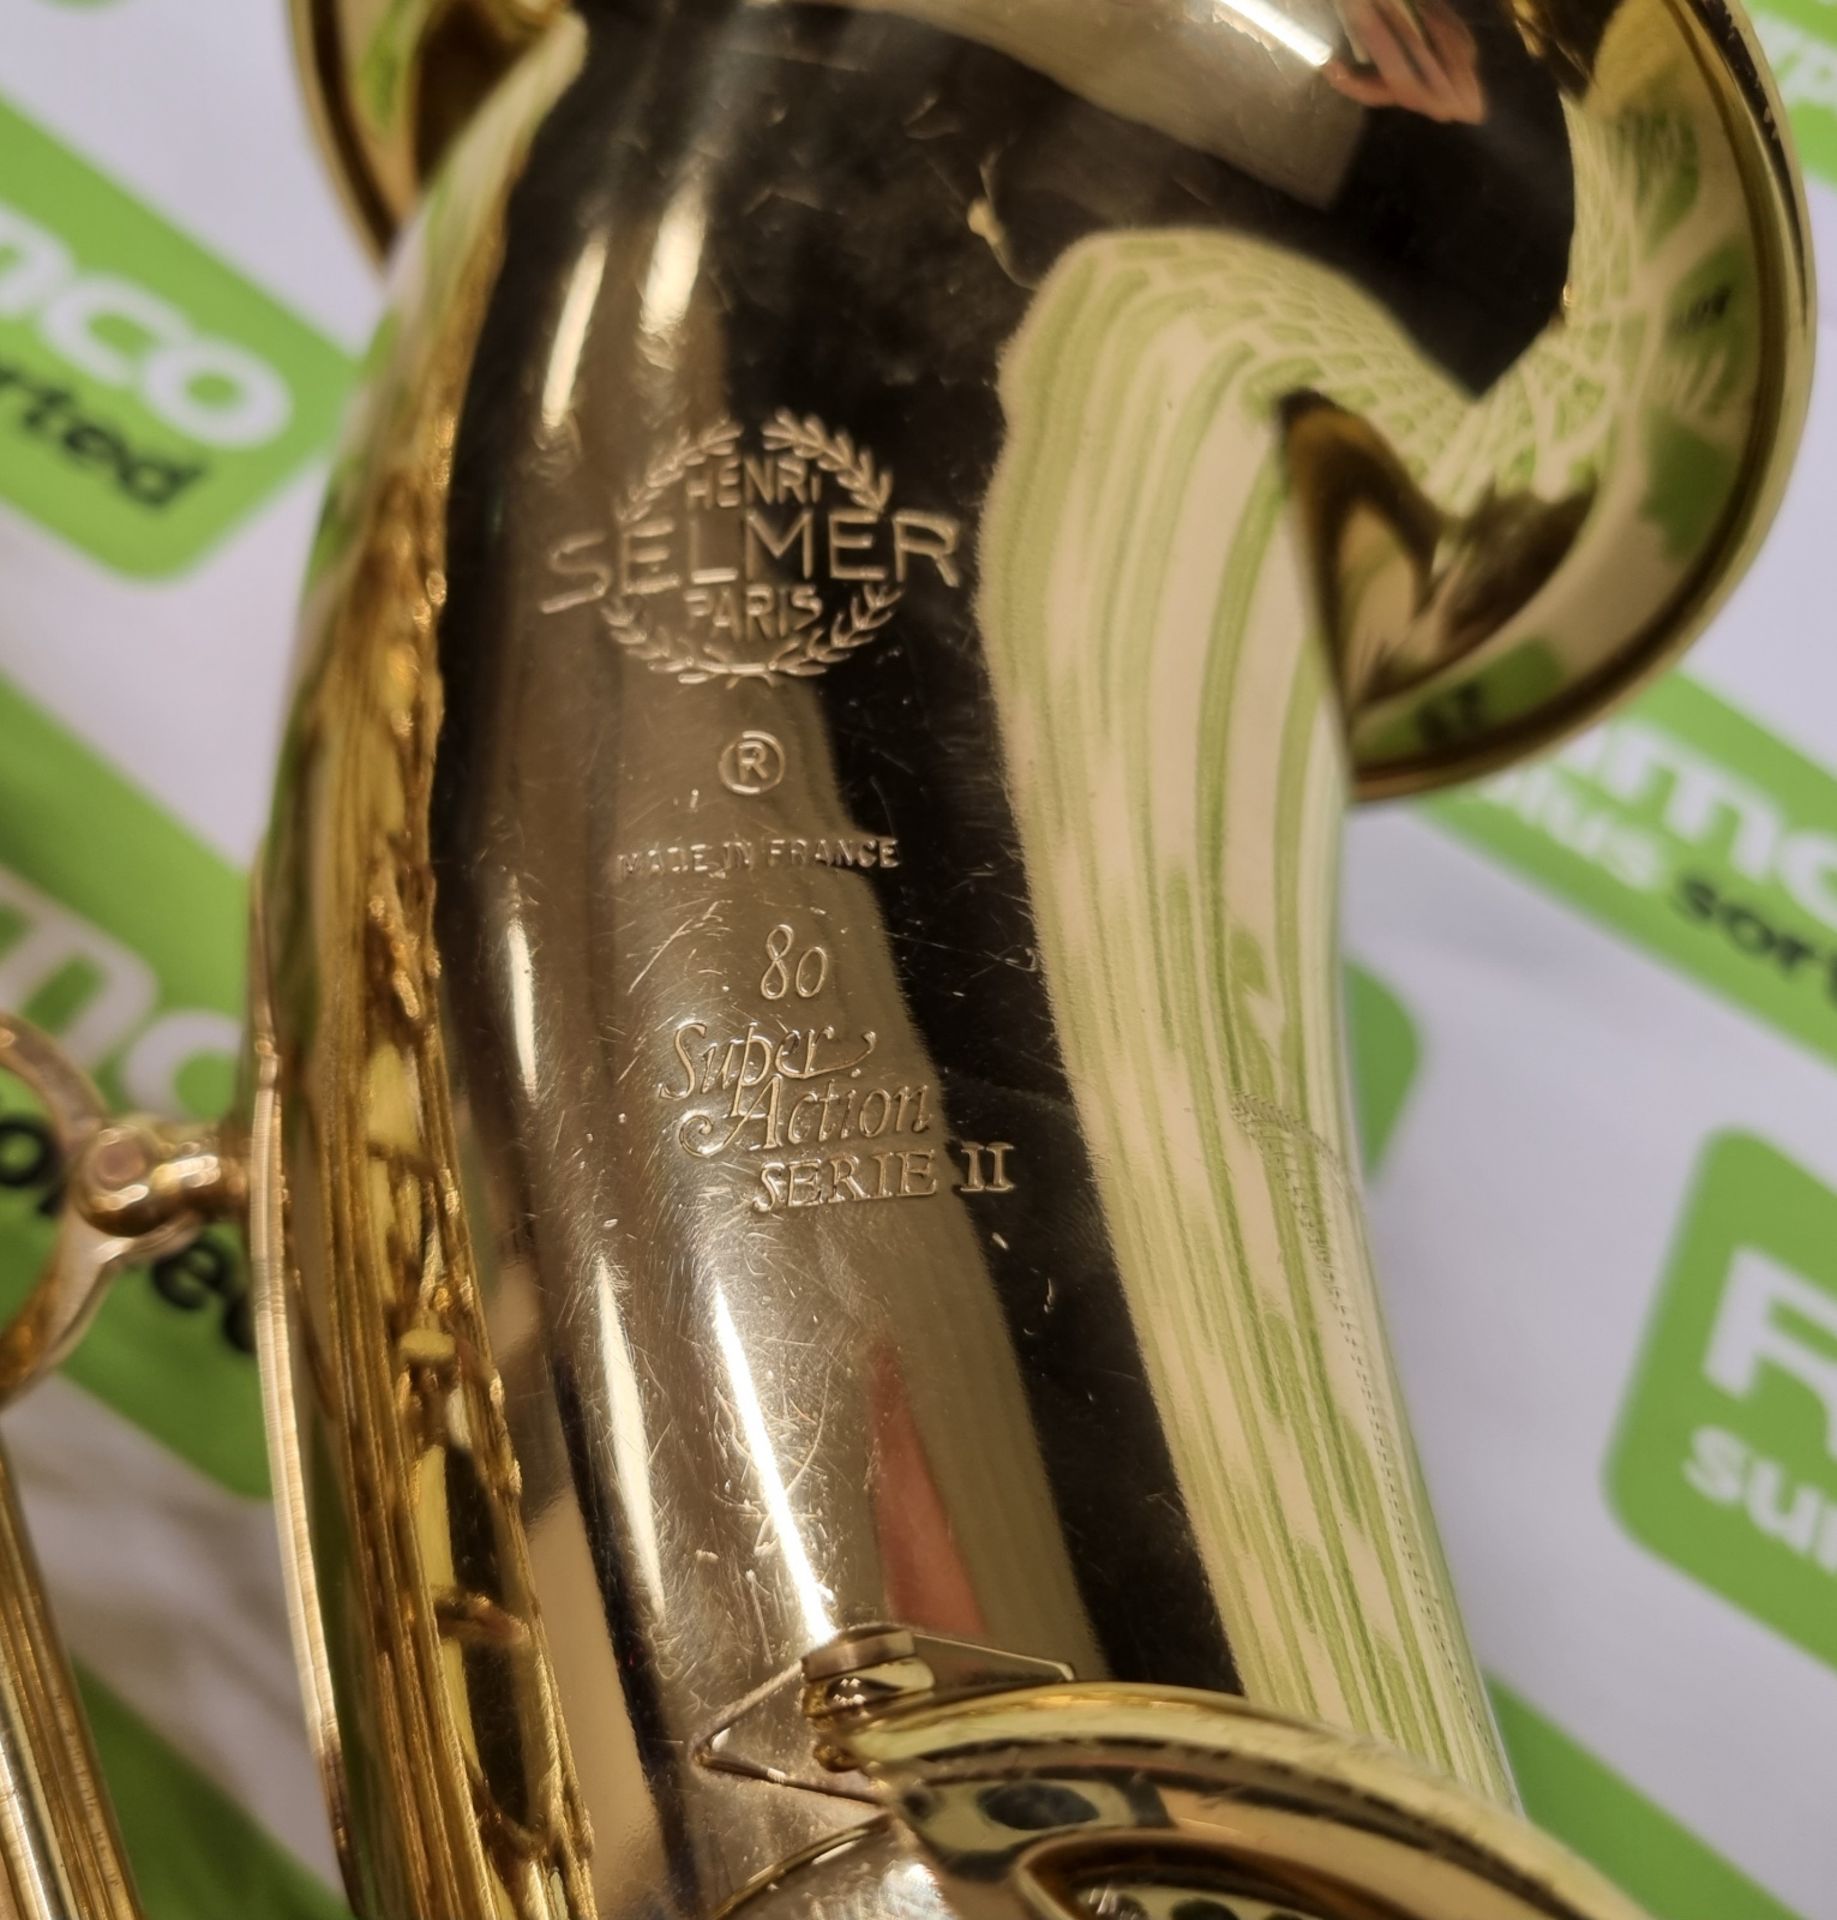 Henri Selmer 80 Super Action Serie ll saxophone in Henri Selmer case - serial number: 702272 - Image 9 of 26